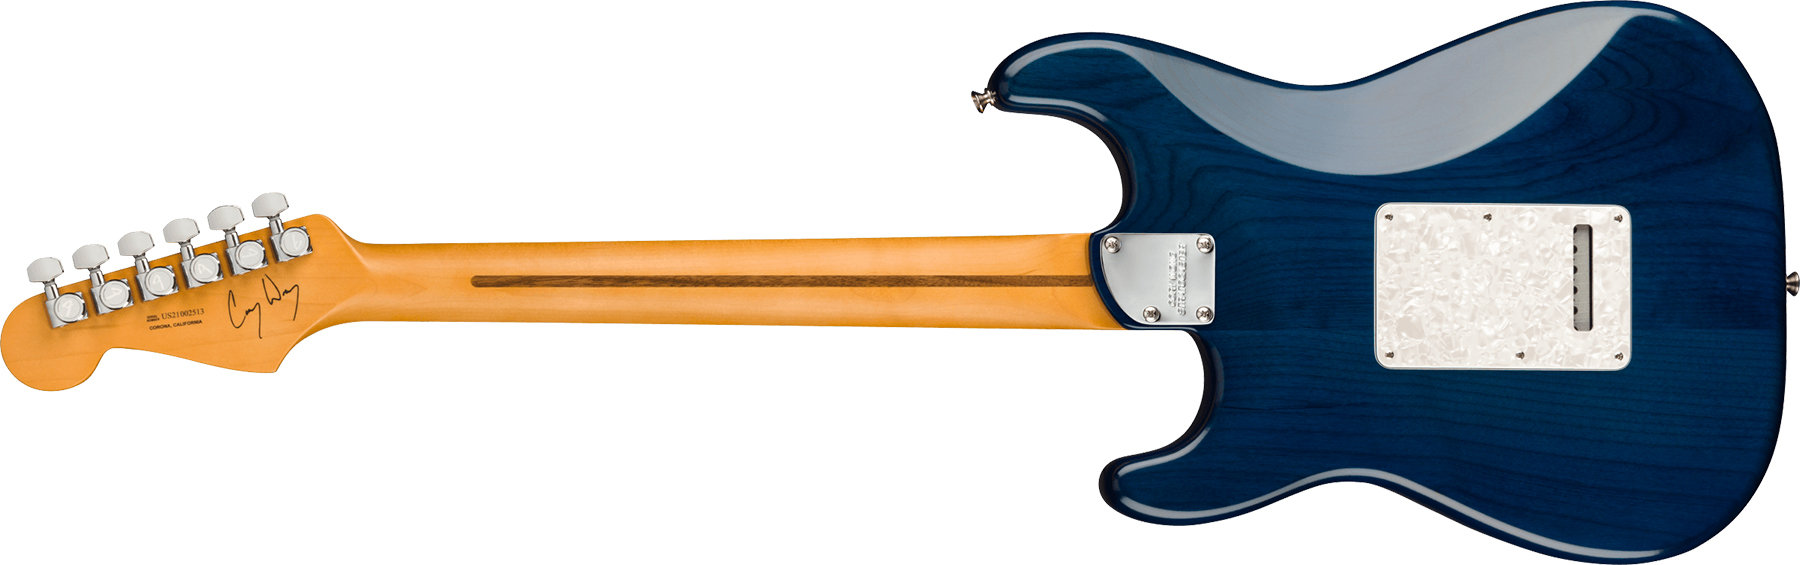 Fender Cory Wong Strat Signature Usa 3s Trem Rw - Sapphire Blue Transparent - Guitarra eléctrica con forma de str. - Variation 1